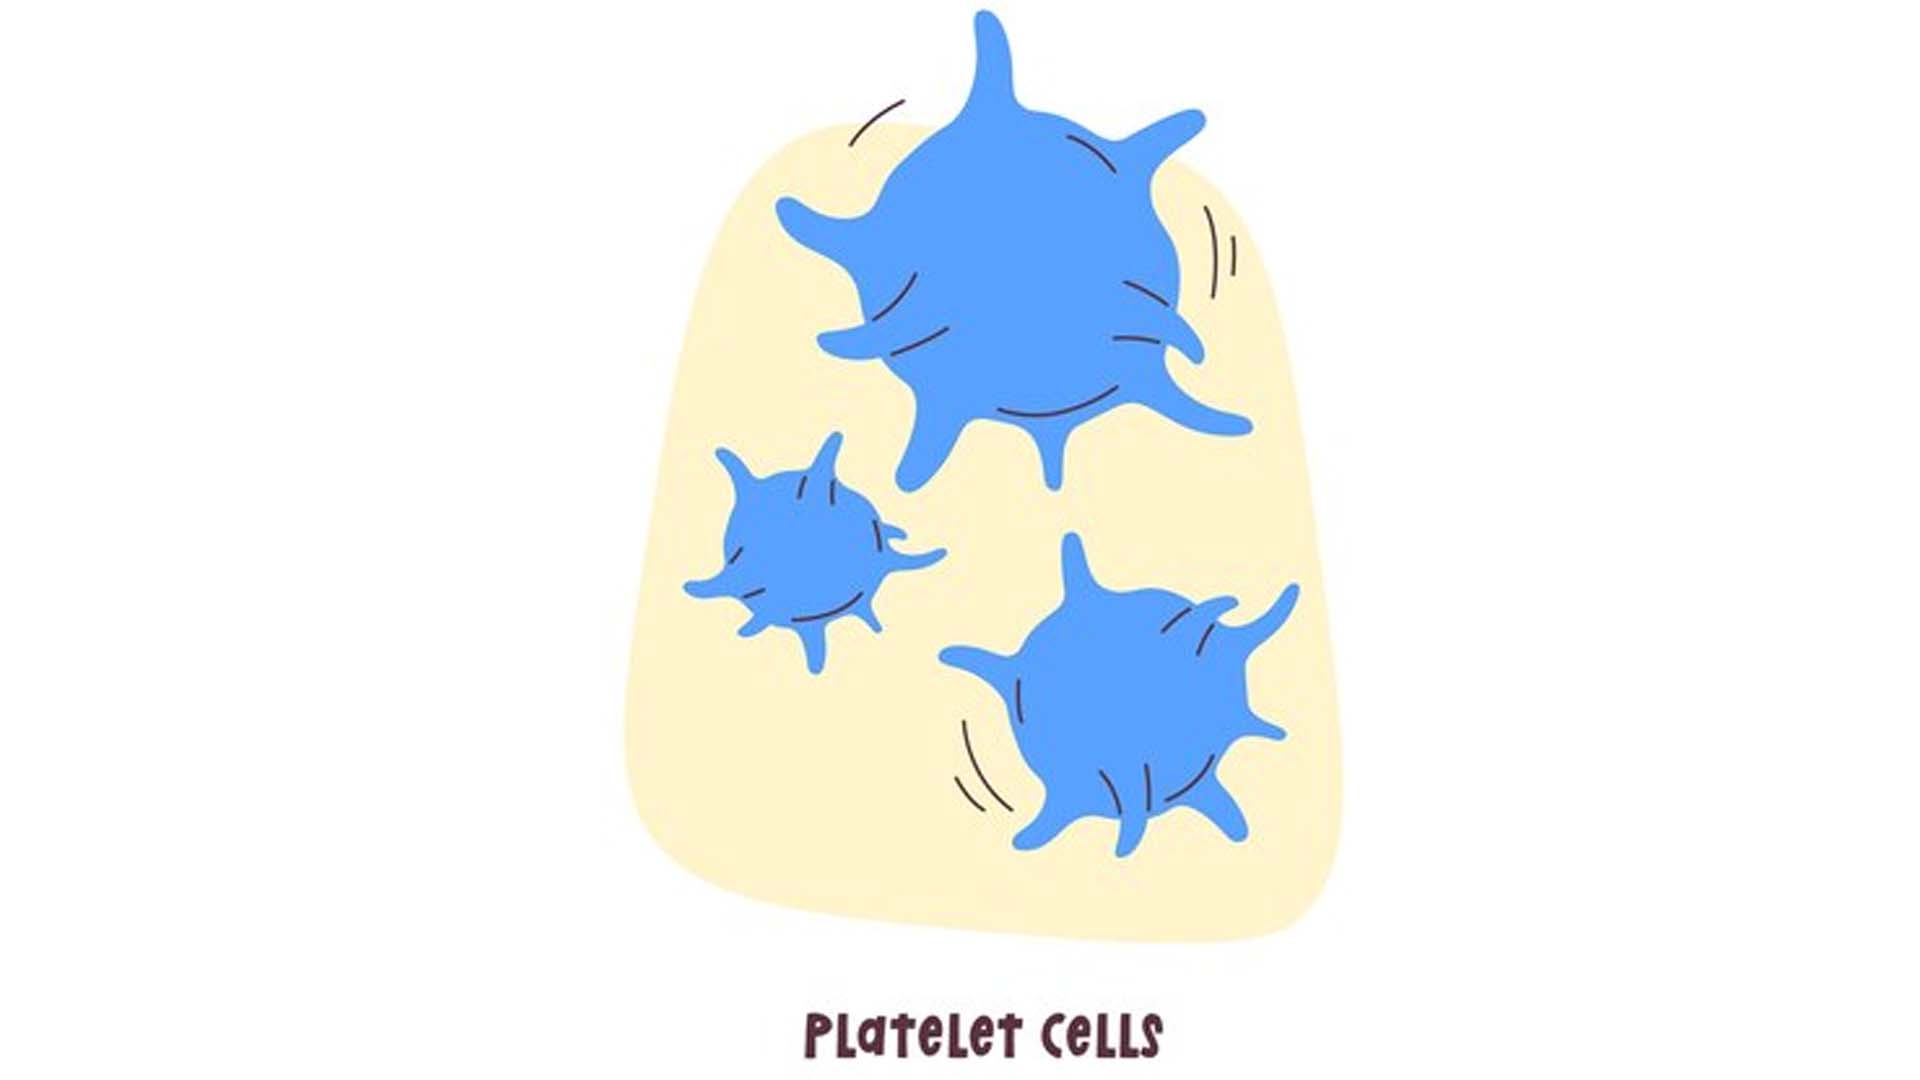 Platelet cells